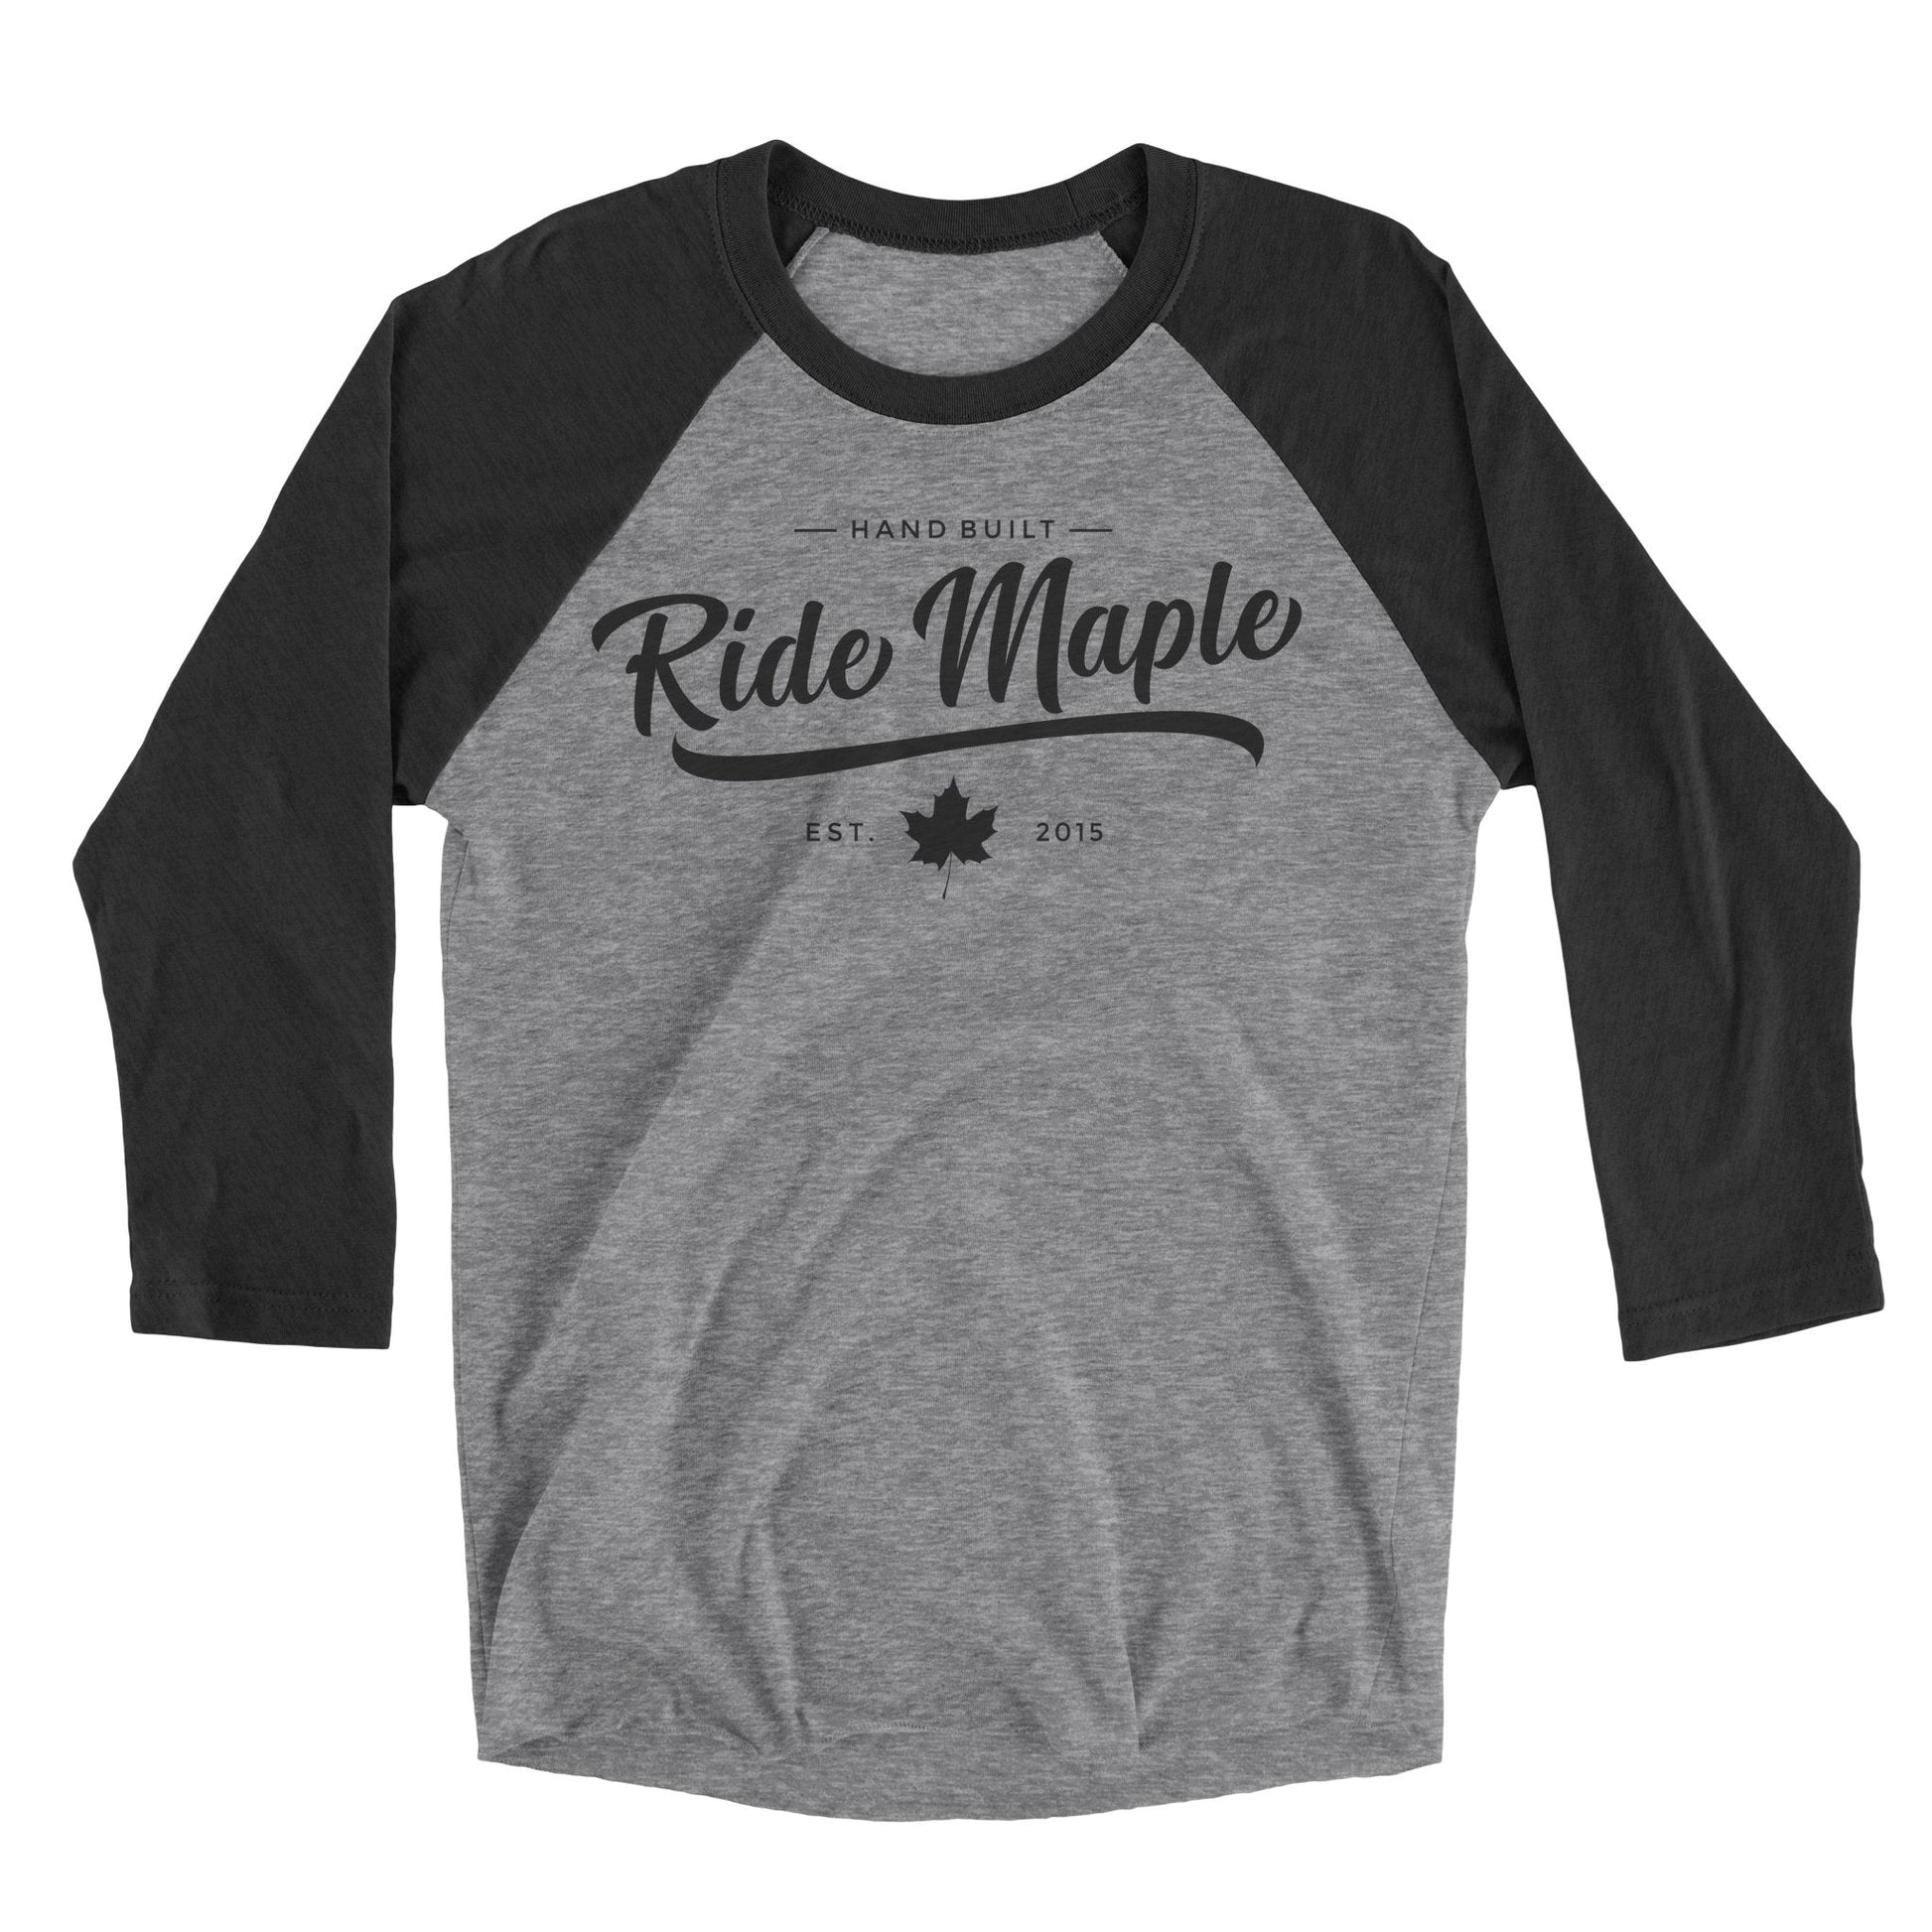 Ride Maple Classy Baller 3/4 Tee - Ride Maple